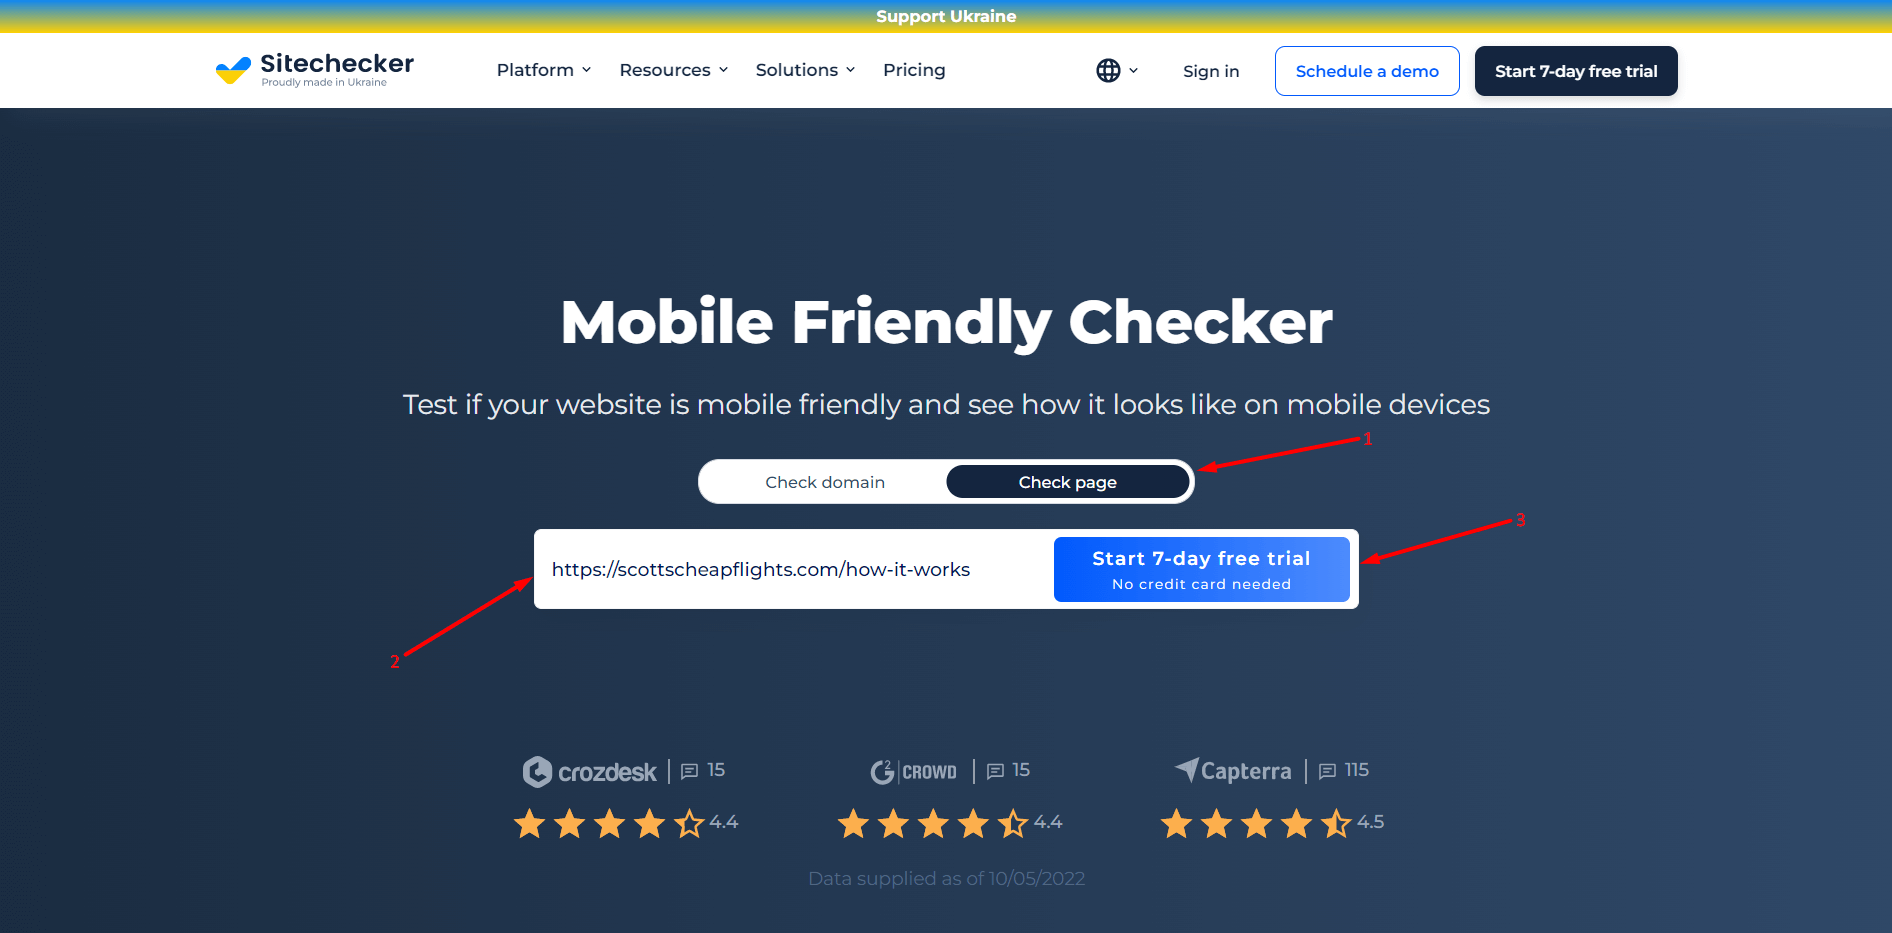 Mobile friendly checker - URL test